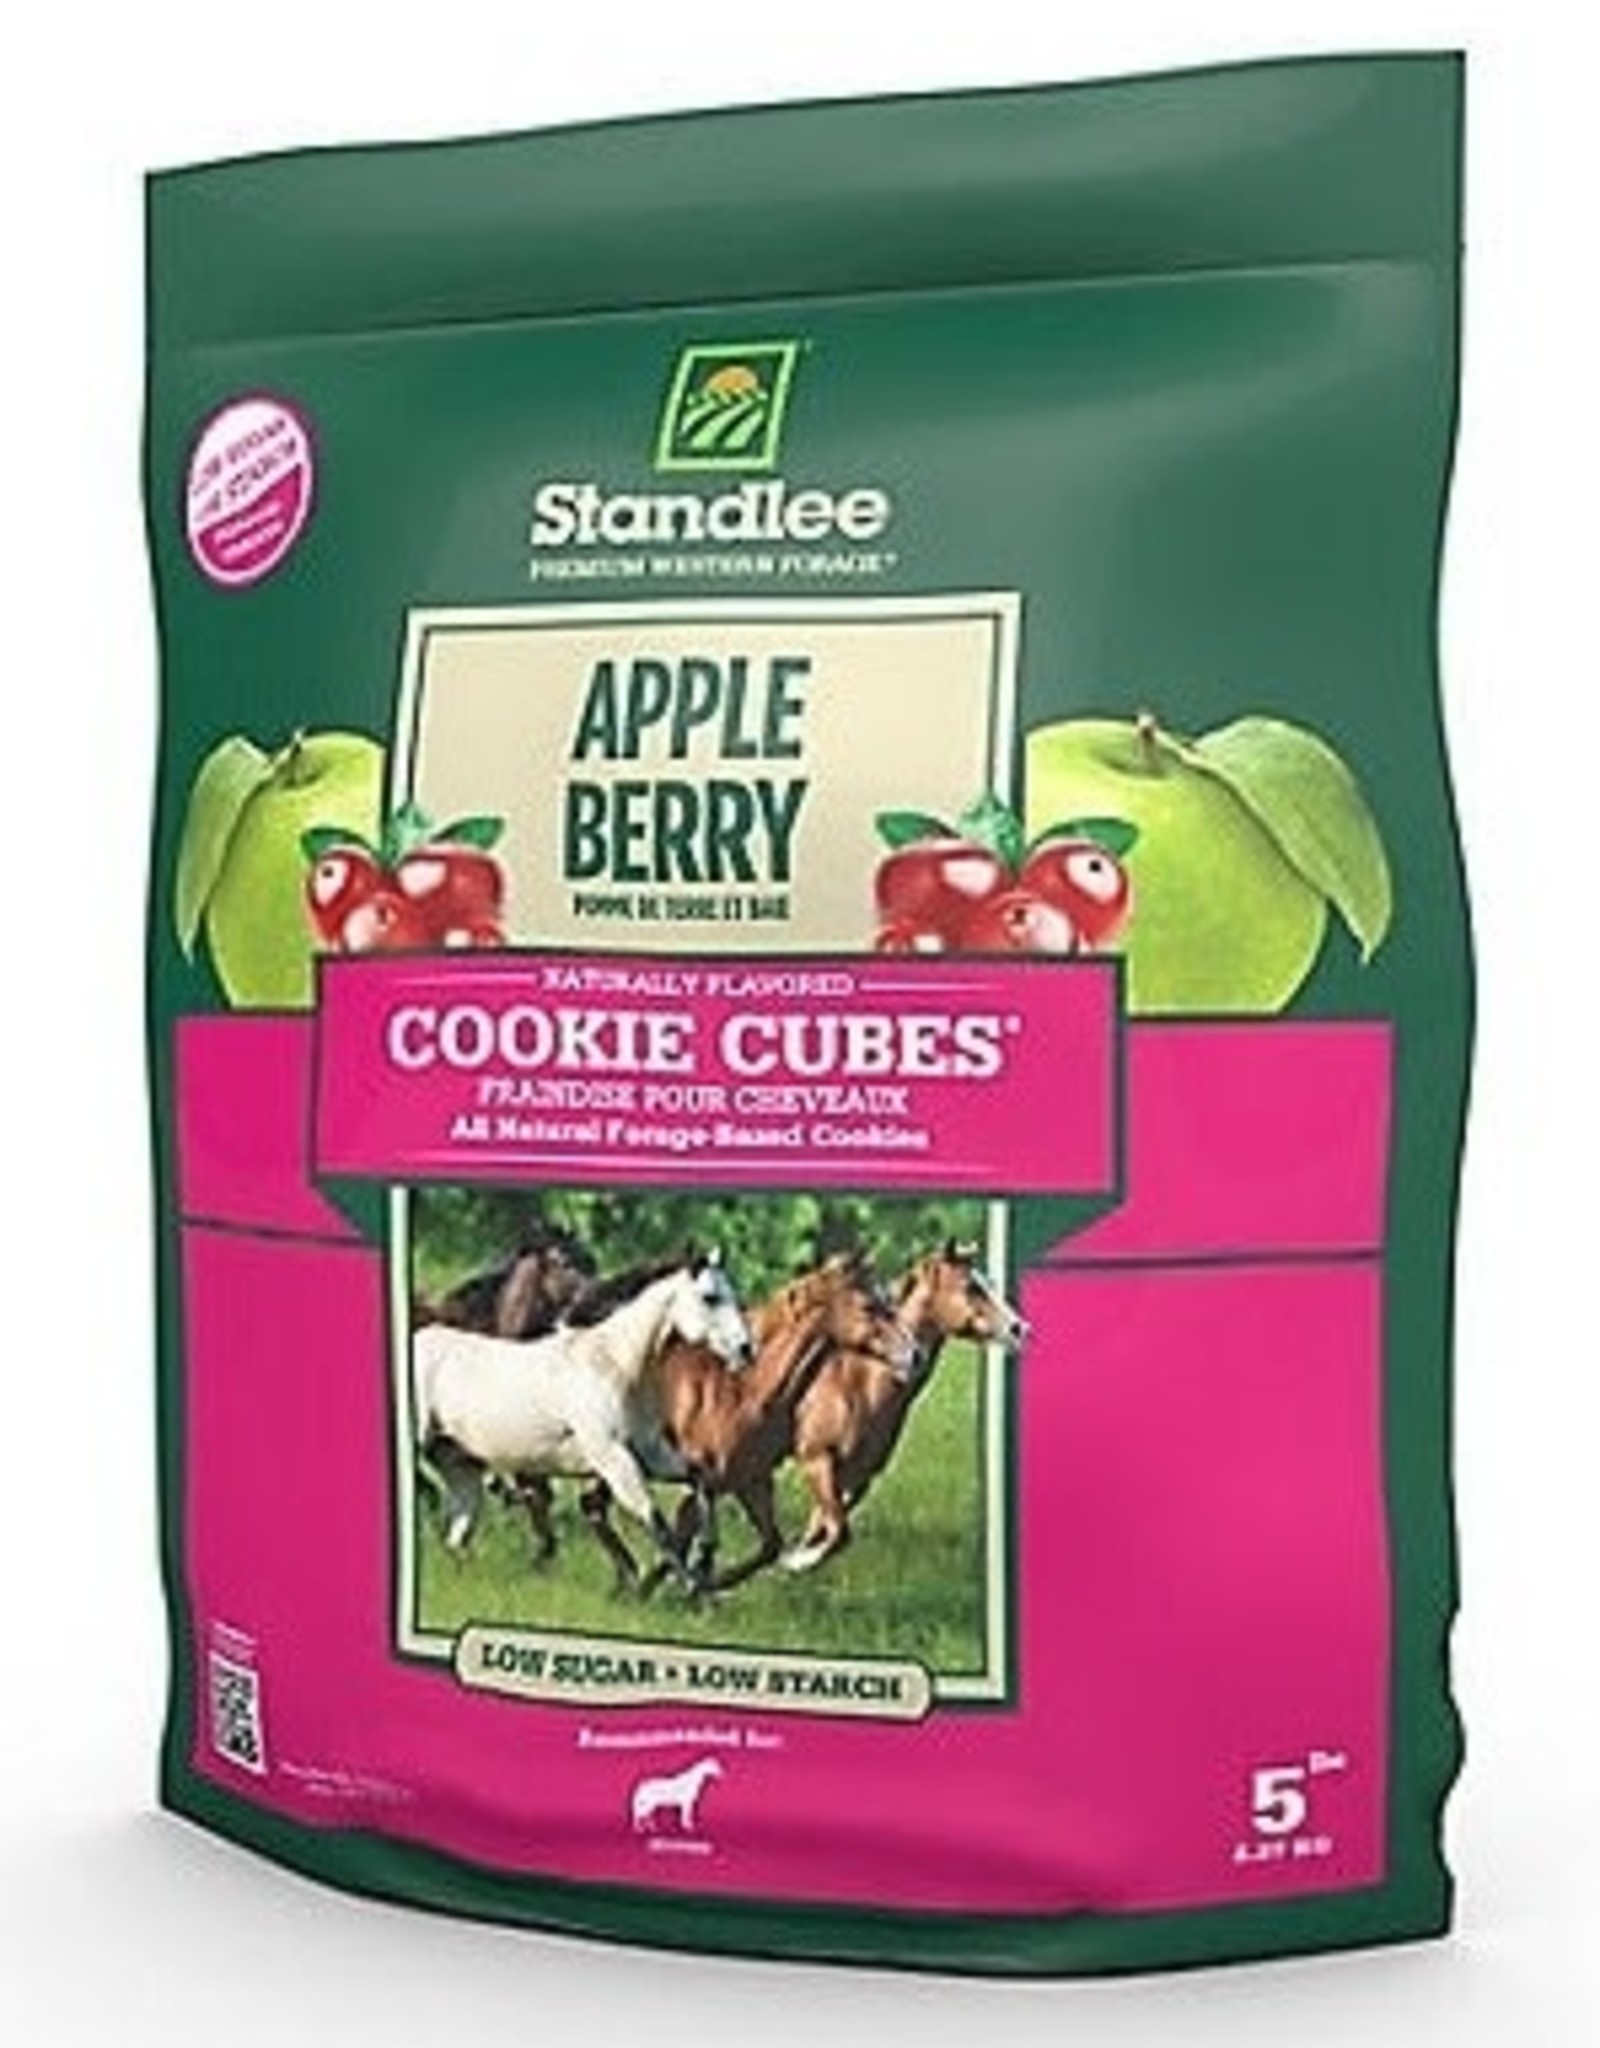 Standee Premium Western Forage Cookie Cubes